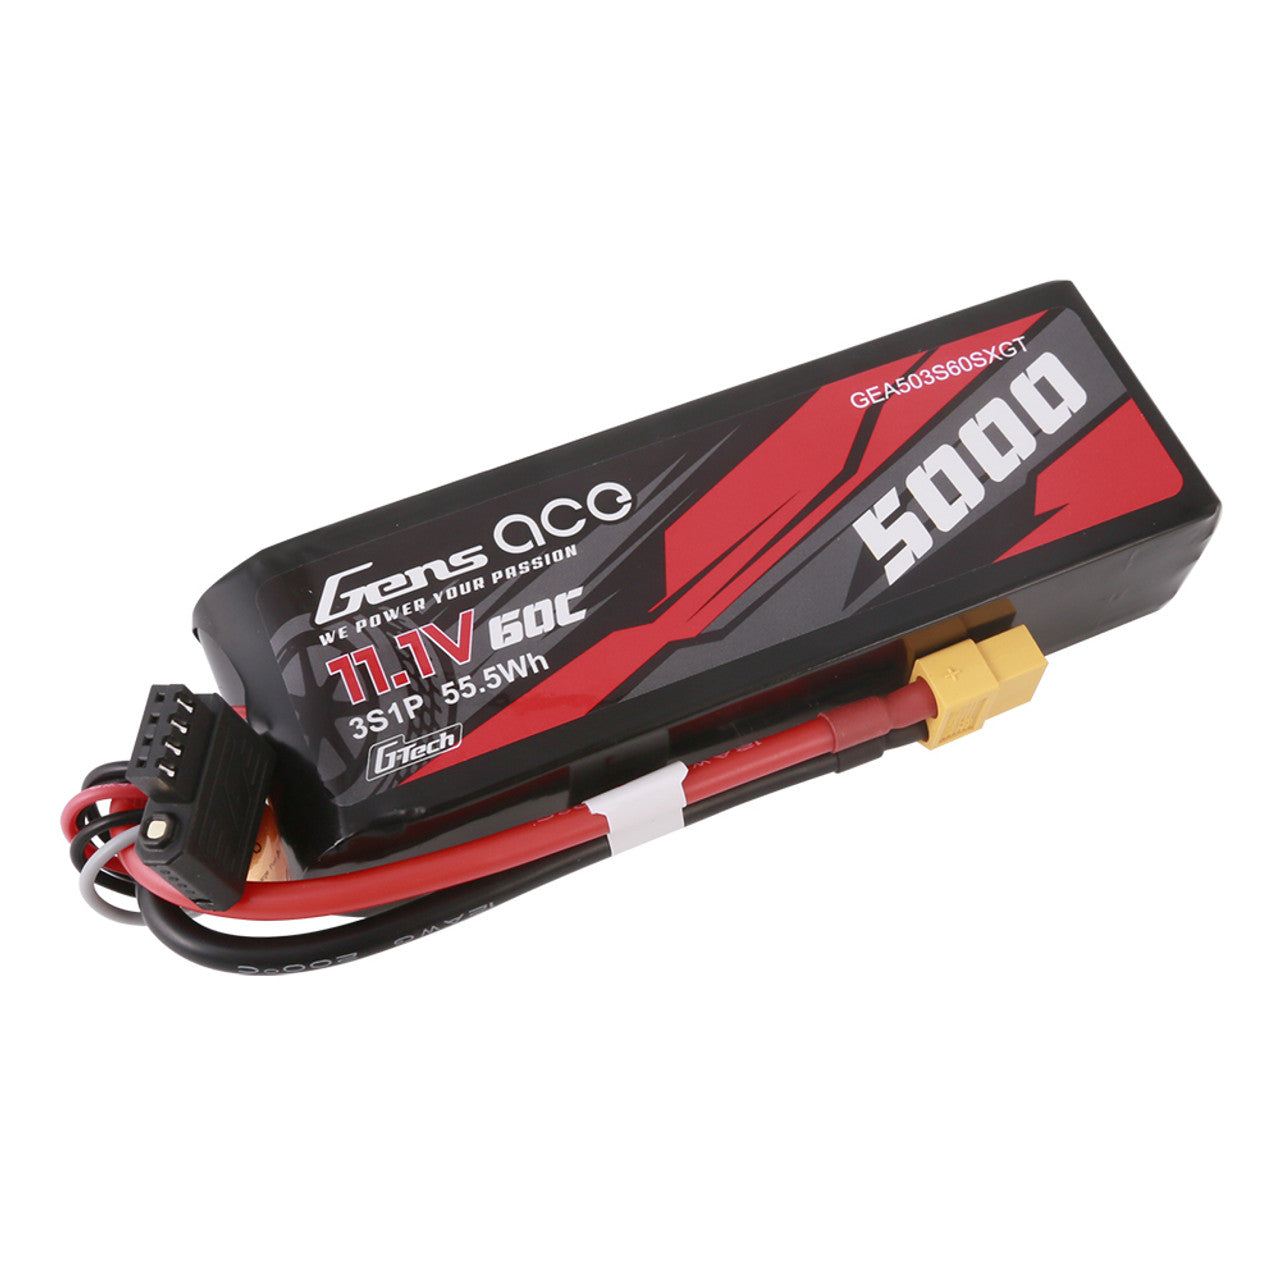 Gens Ace G-Tech 11.1V 60C 3S 5000mAh Lipo Battery Pack With XT60 Plug